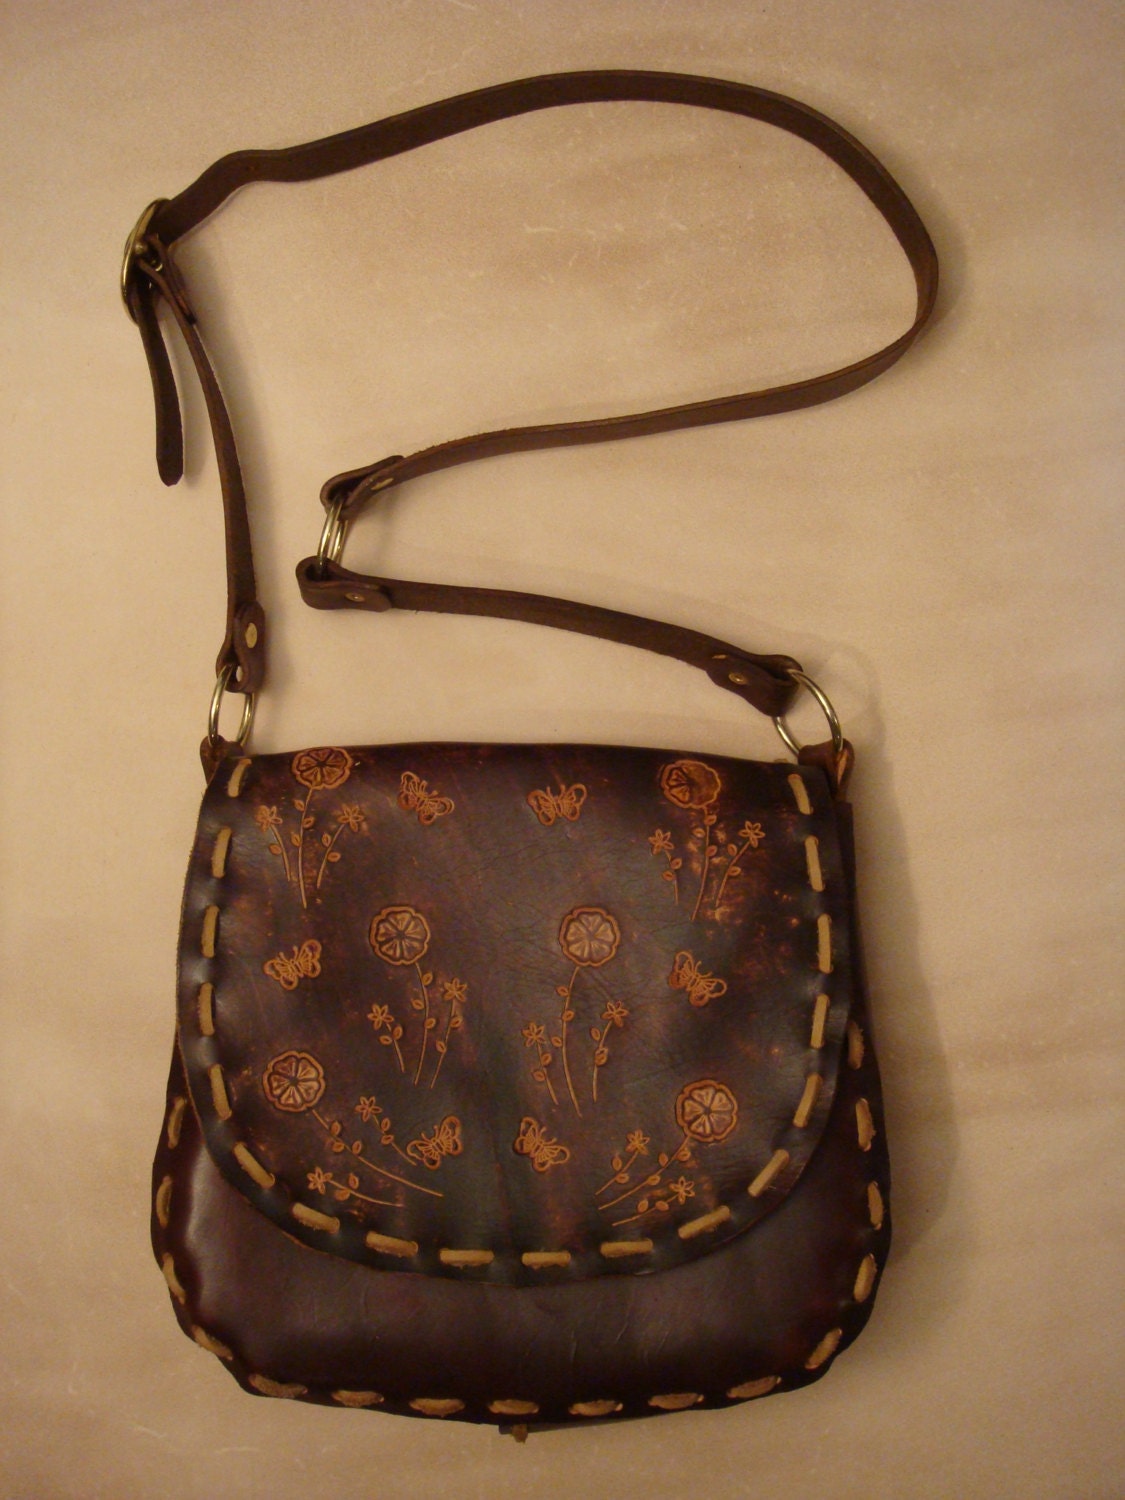 Tooled Brown Leather Crossbody Bag Shoulder Bag by HawkinsLeather